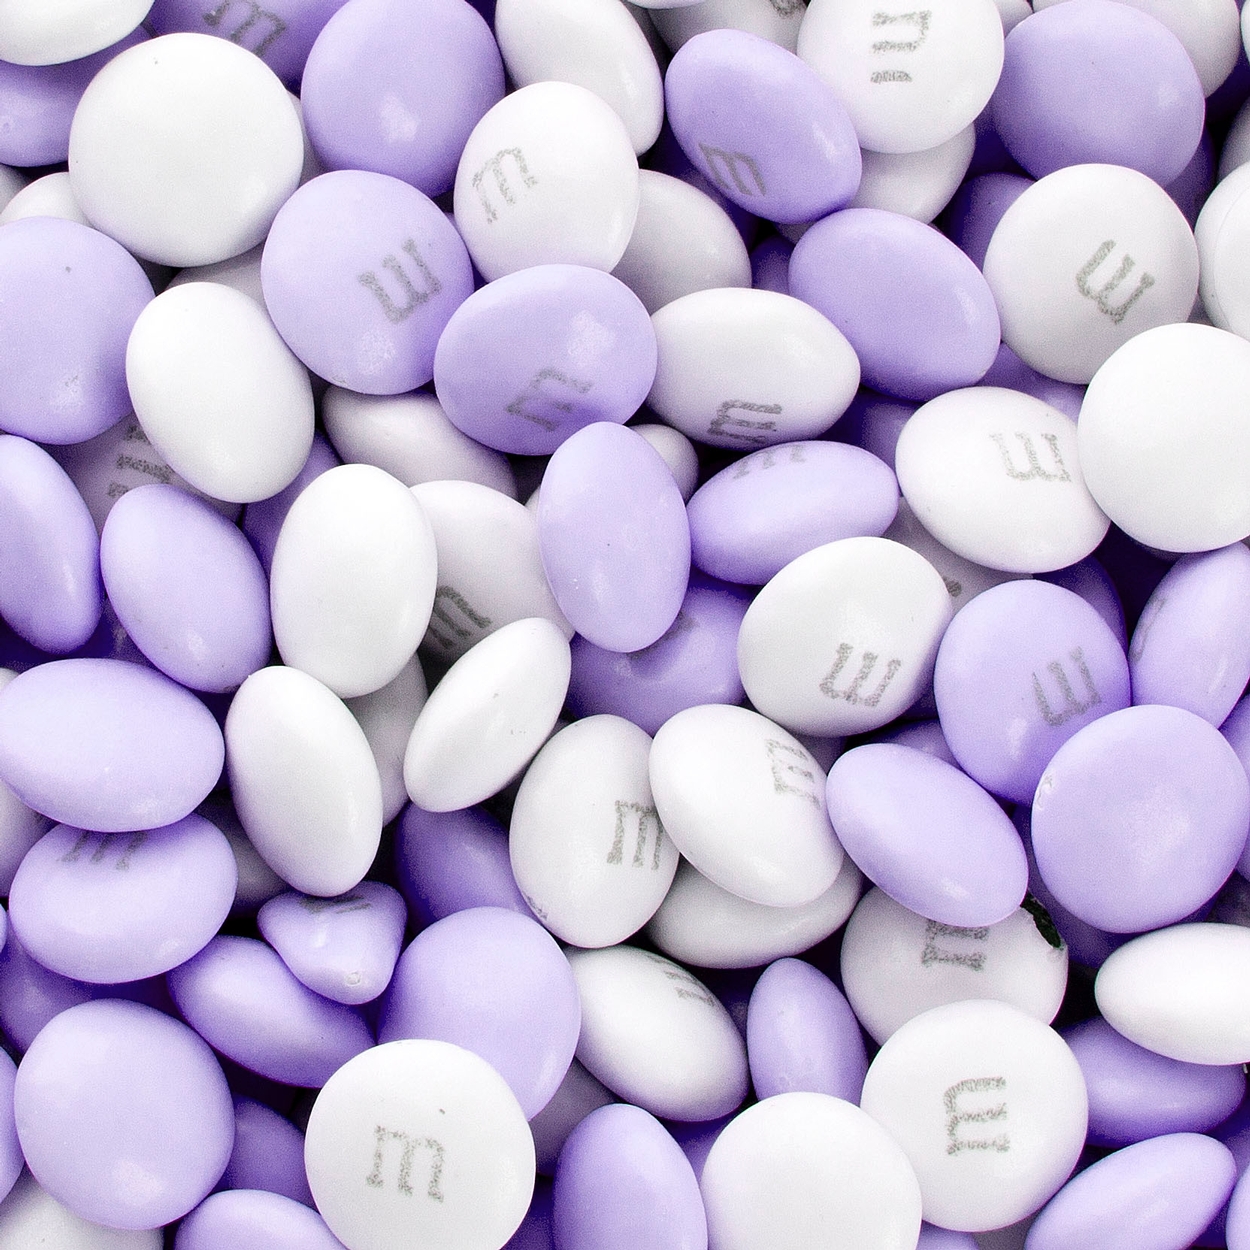 Purple M&Ms Candy - 10lb